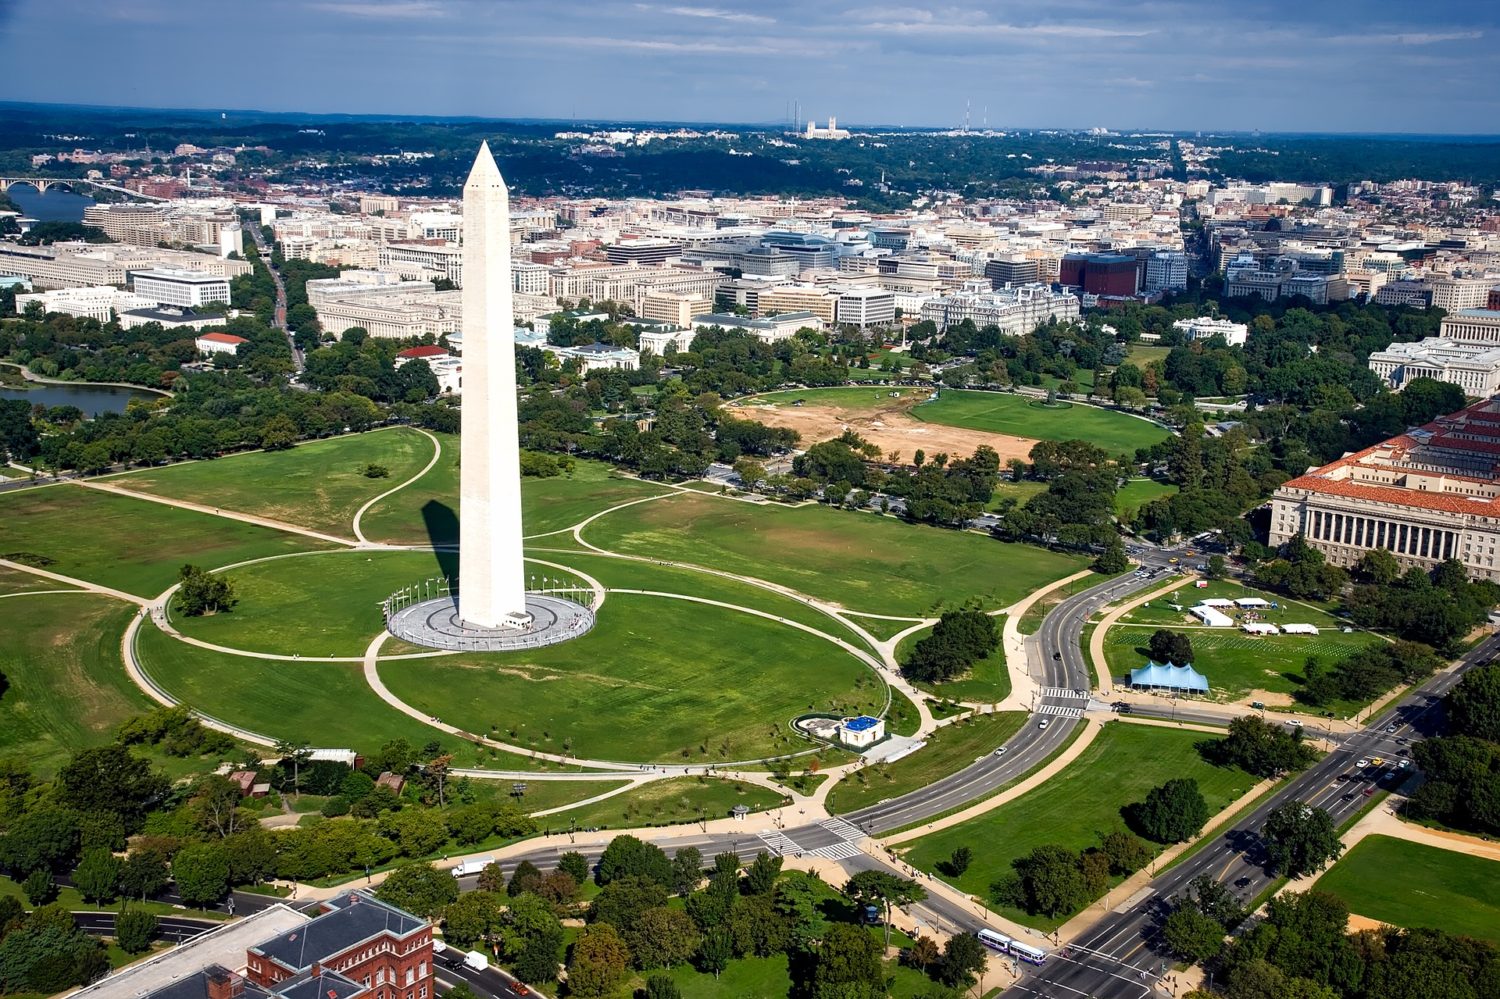 Washington Monument, Washington, D.C., USA